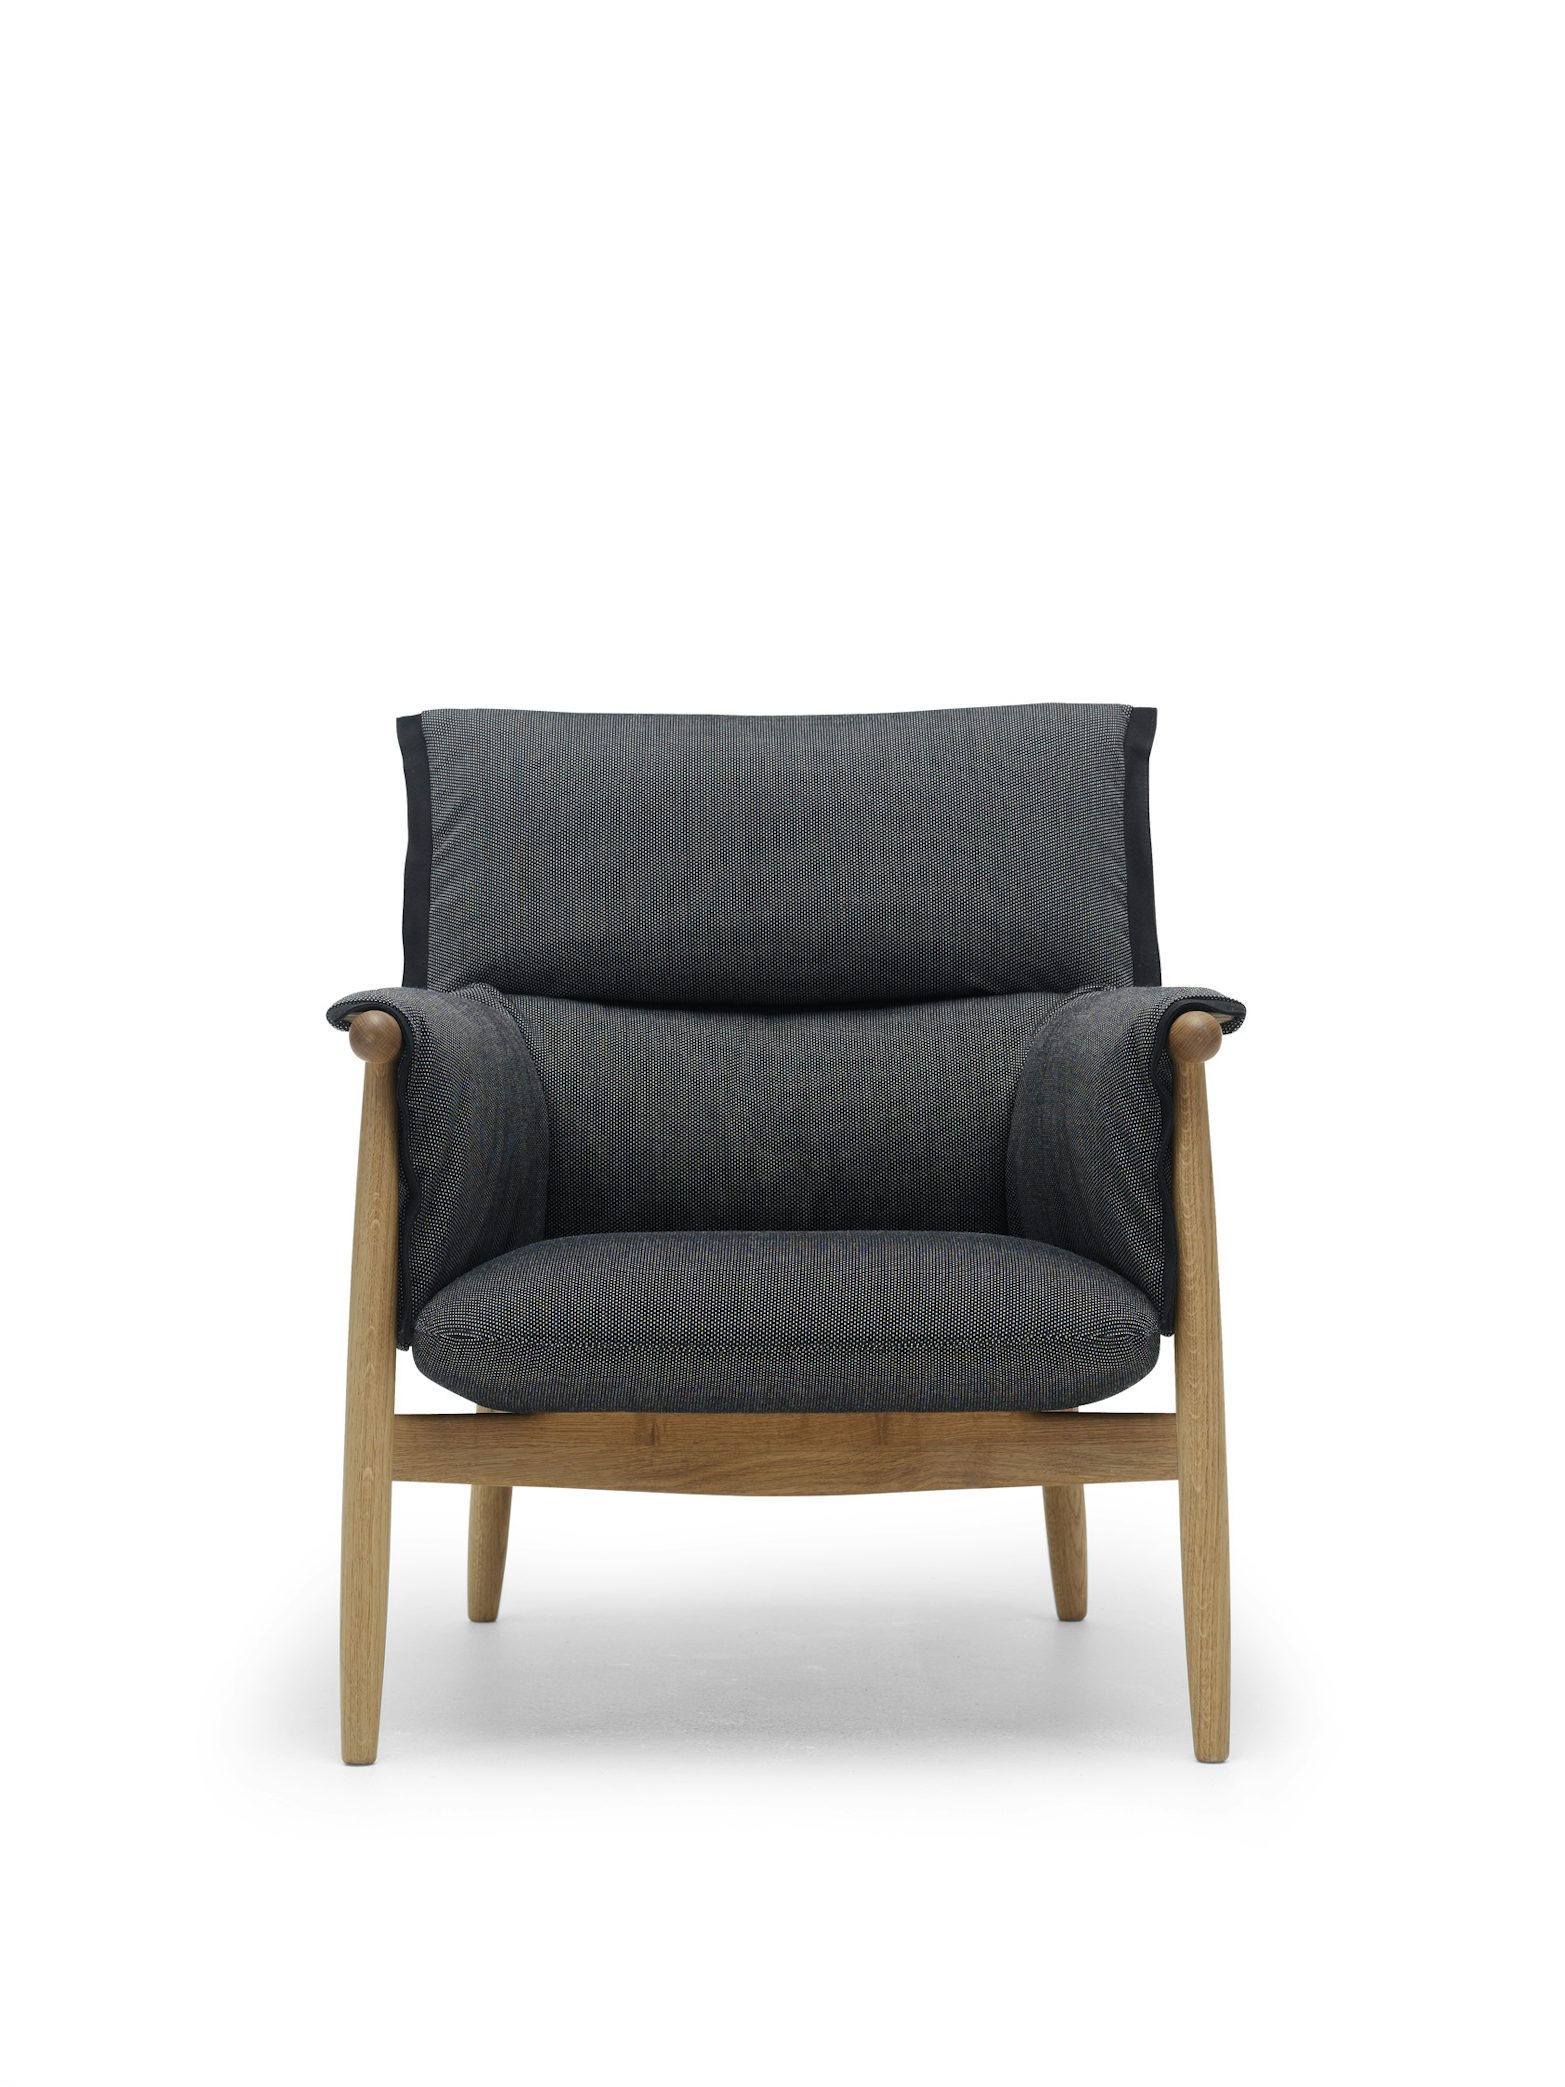 E015 Embrace Lounge Chair EOOS Carl Hansen 2